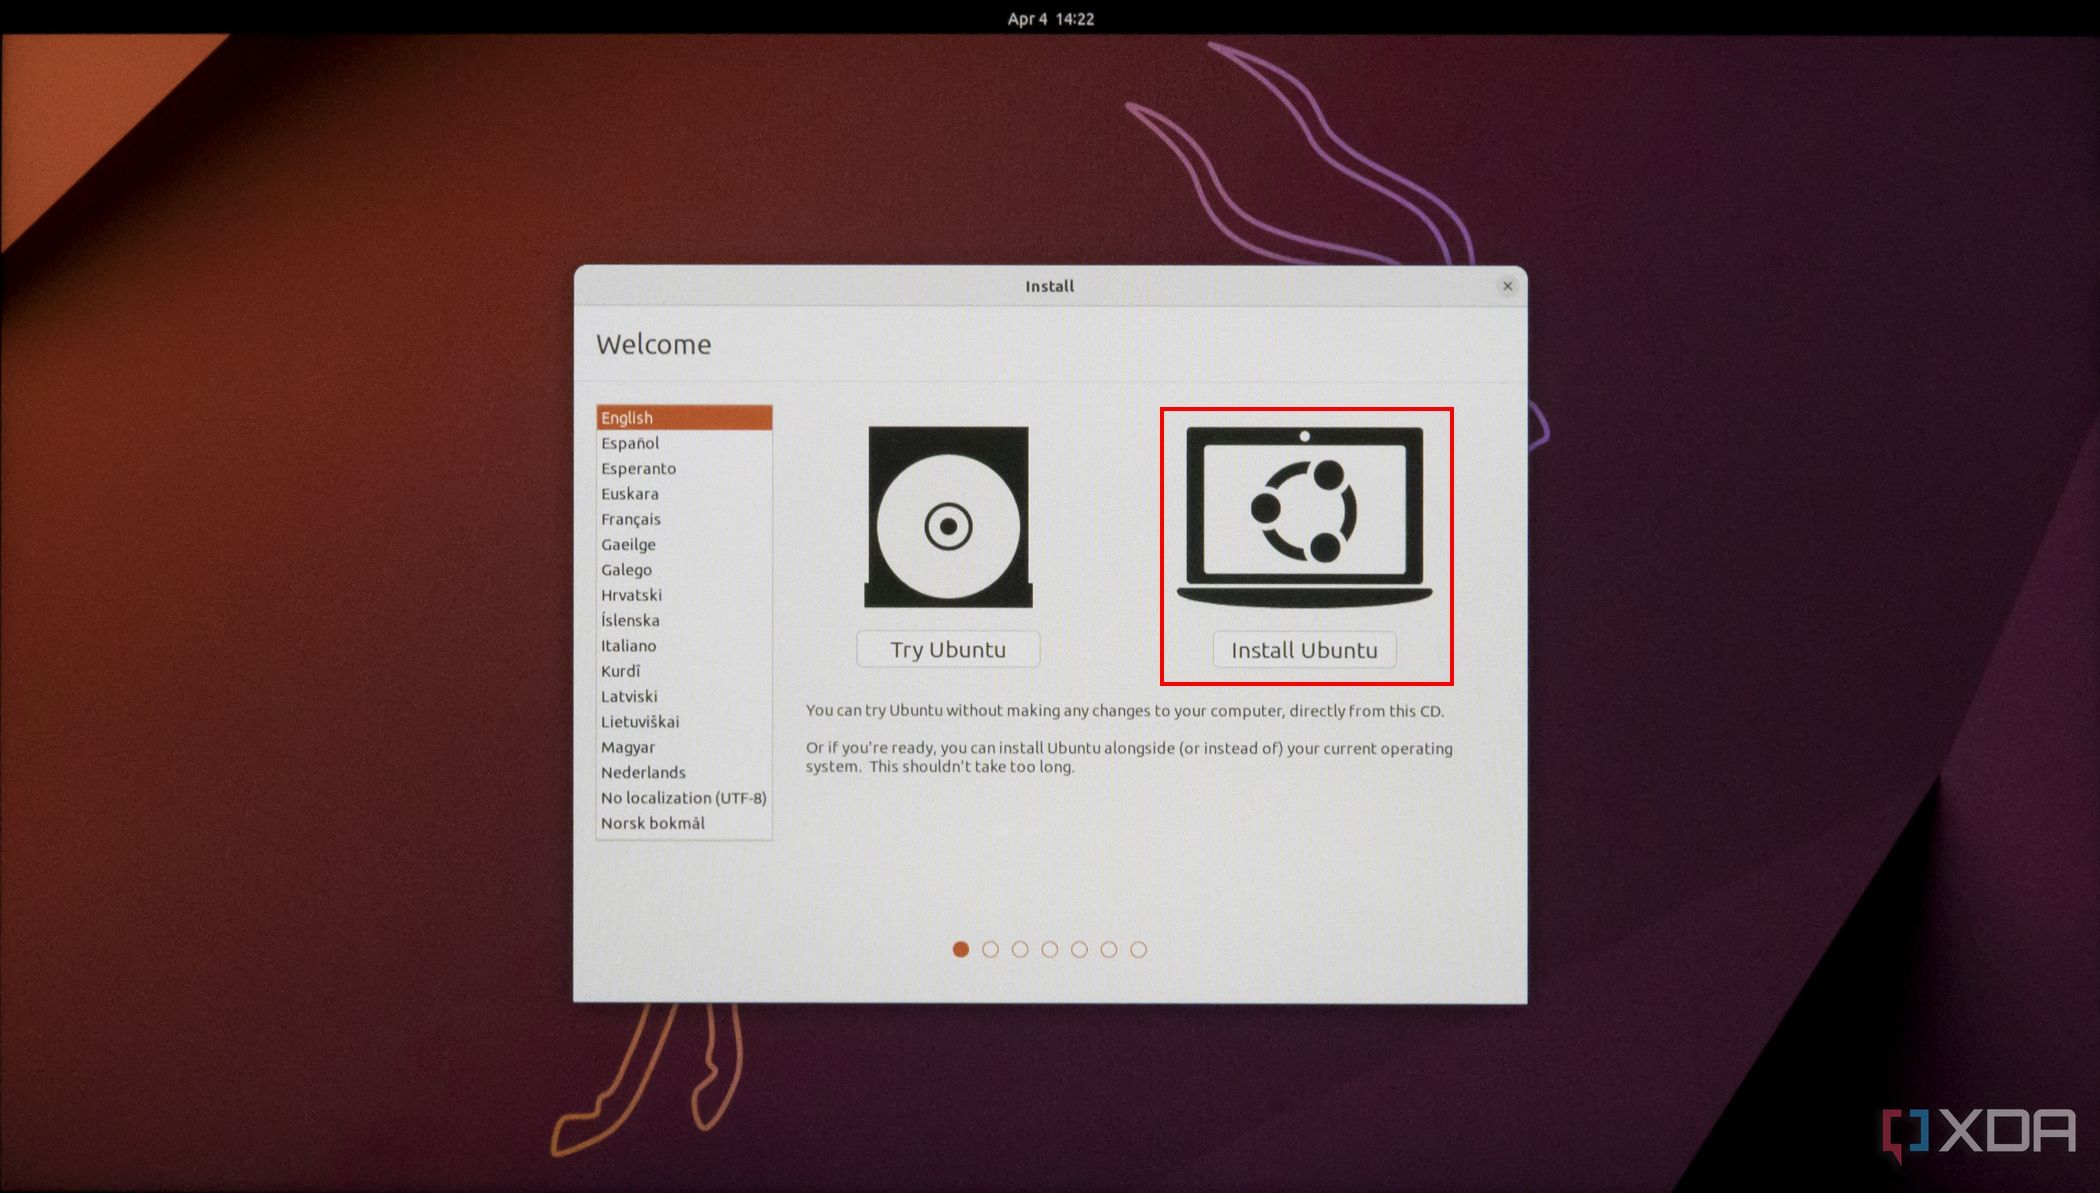 Screenshot of the Ubuntu installer with the option to install Ubuntu highlighted